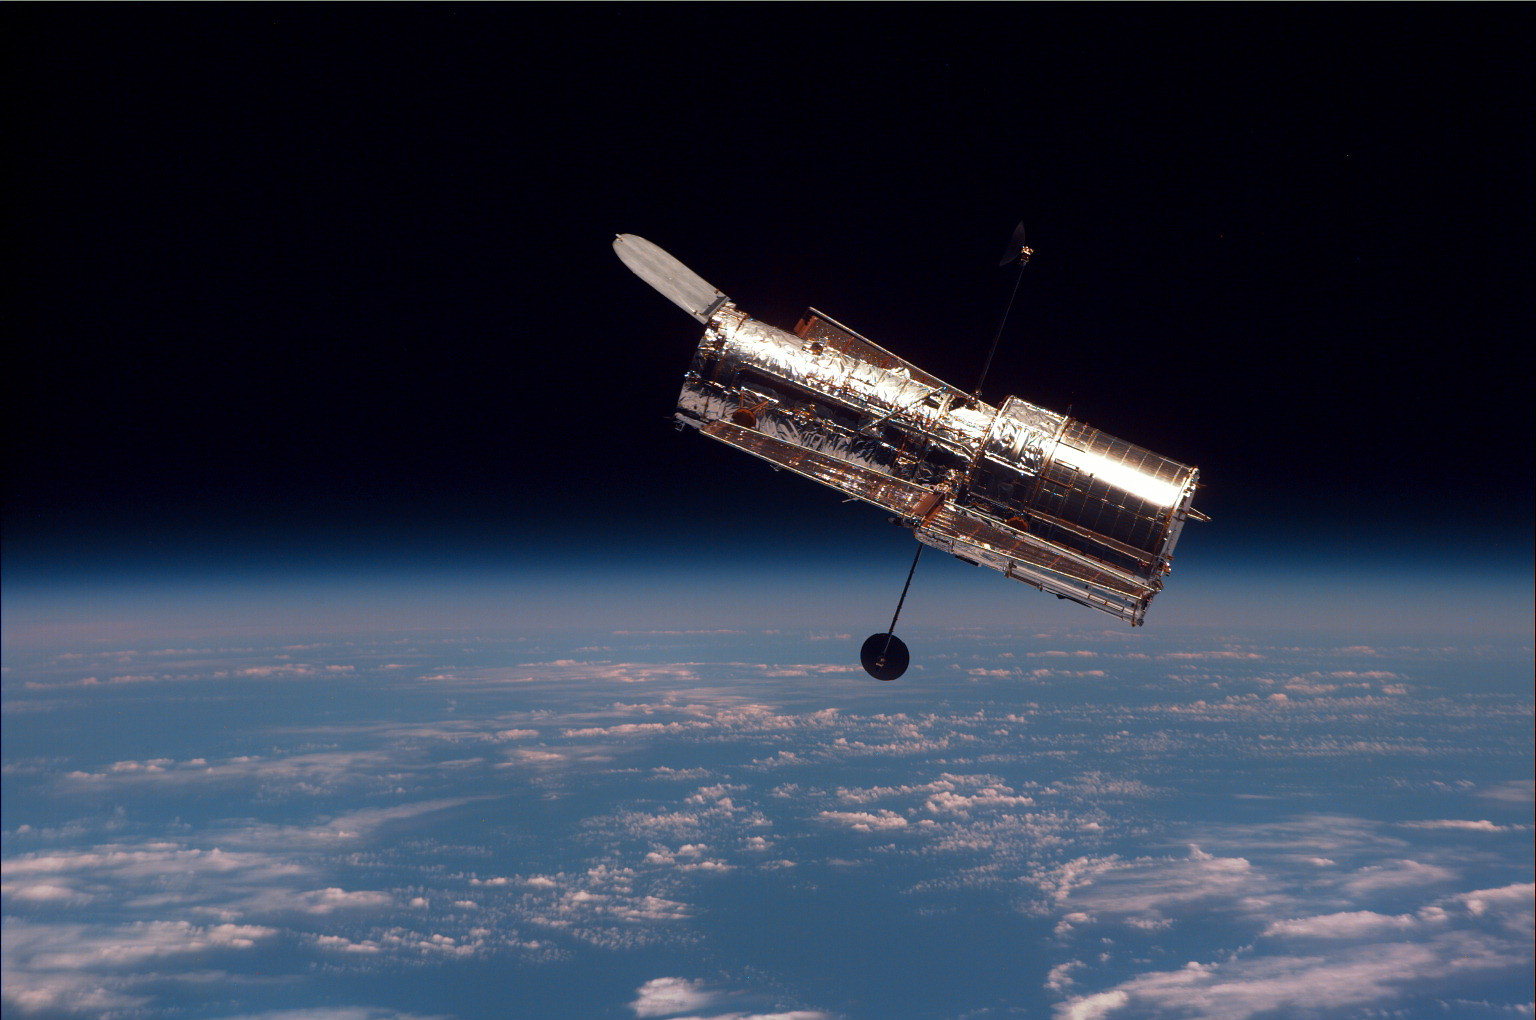 The Hubble Space Telescope seen in orbit around Earth.